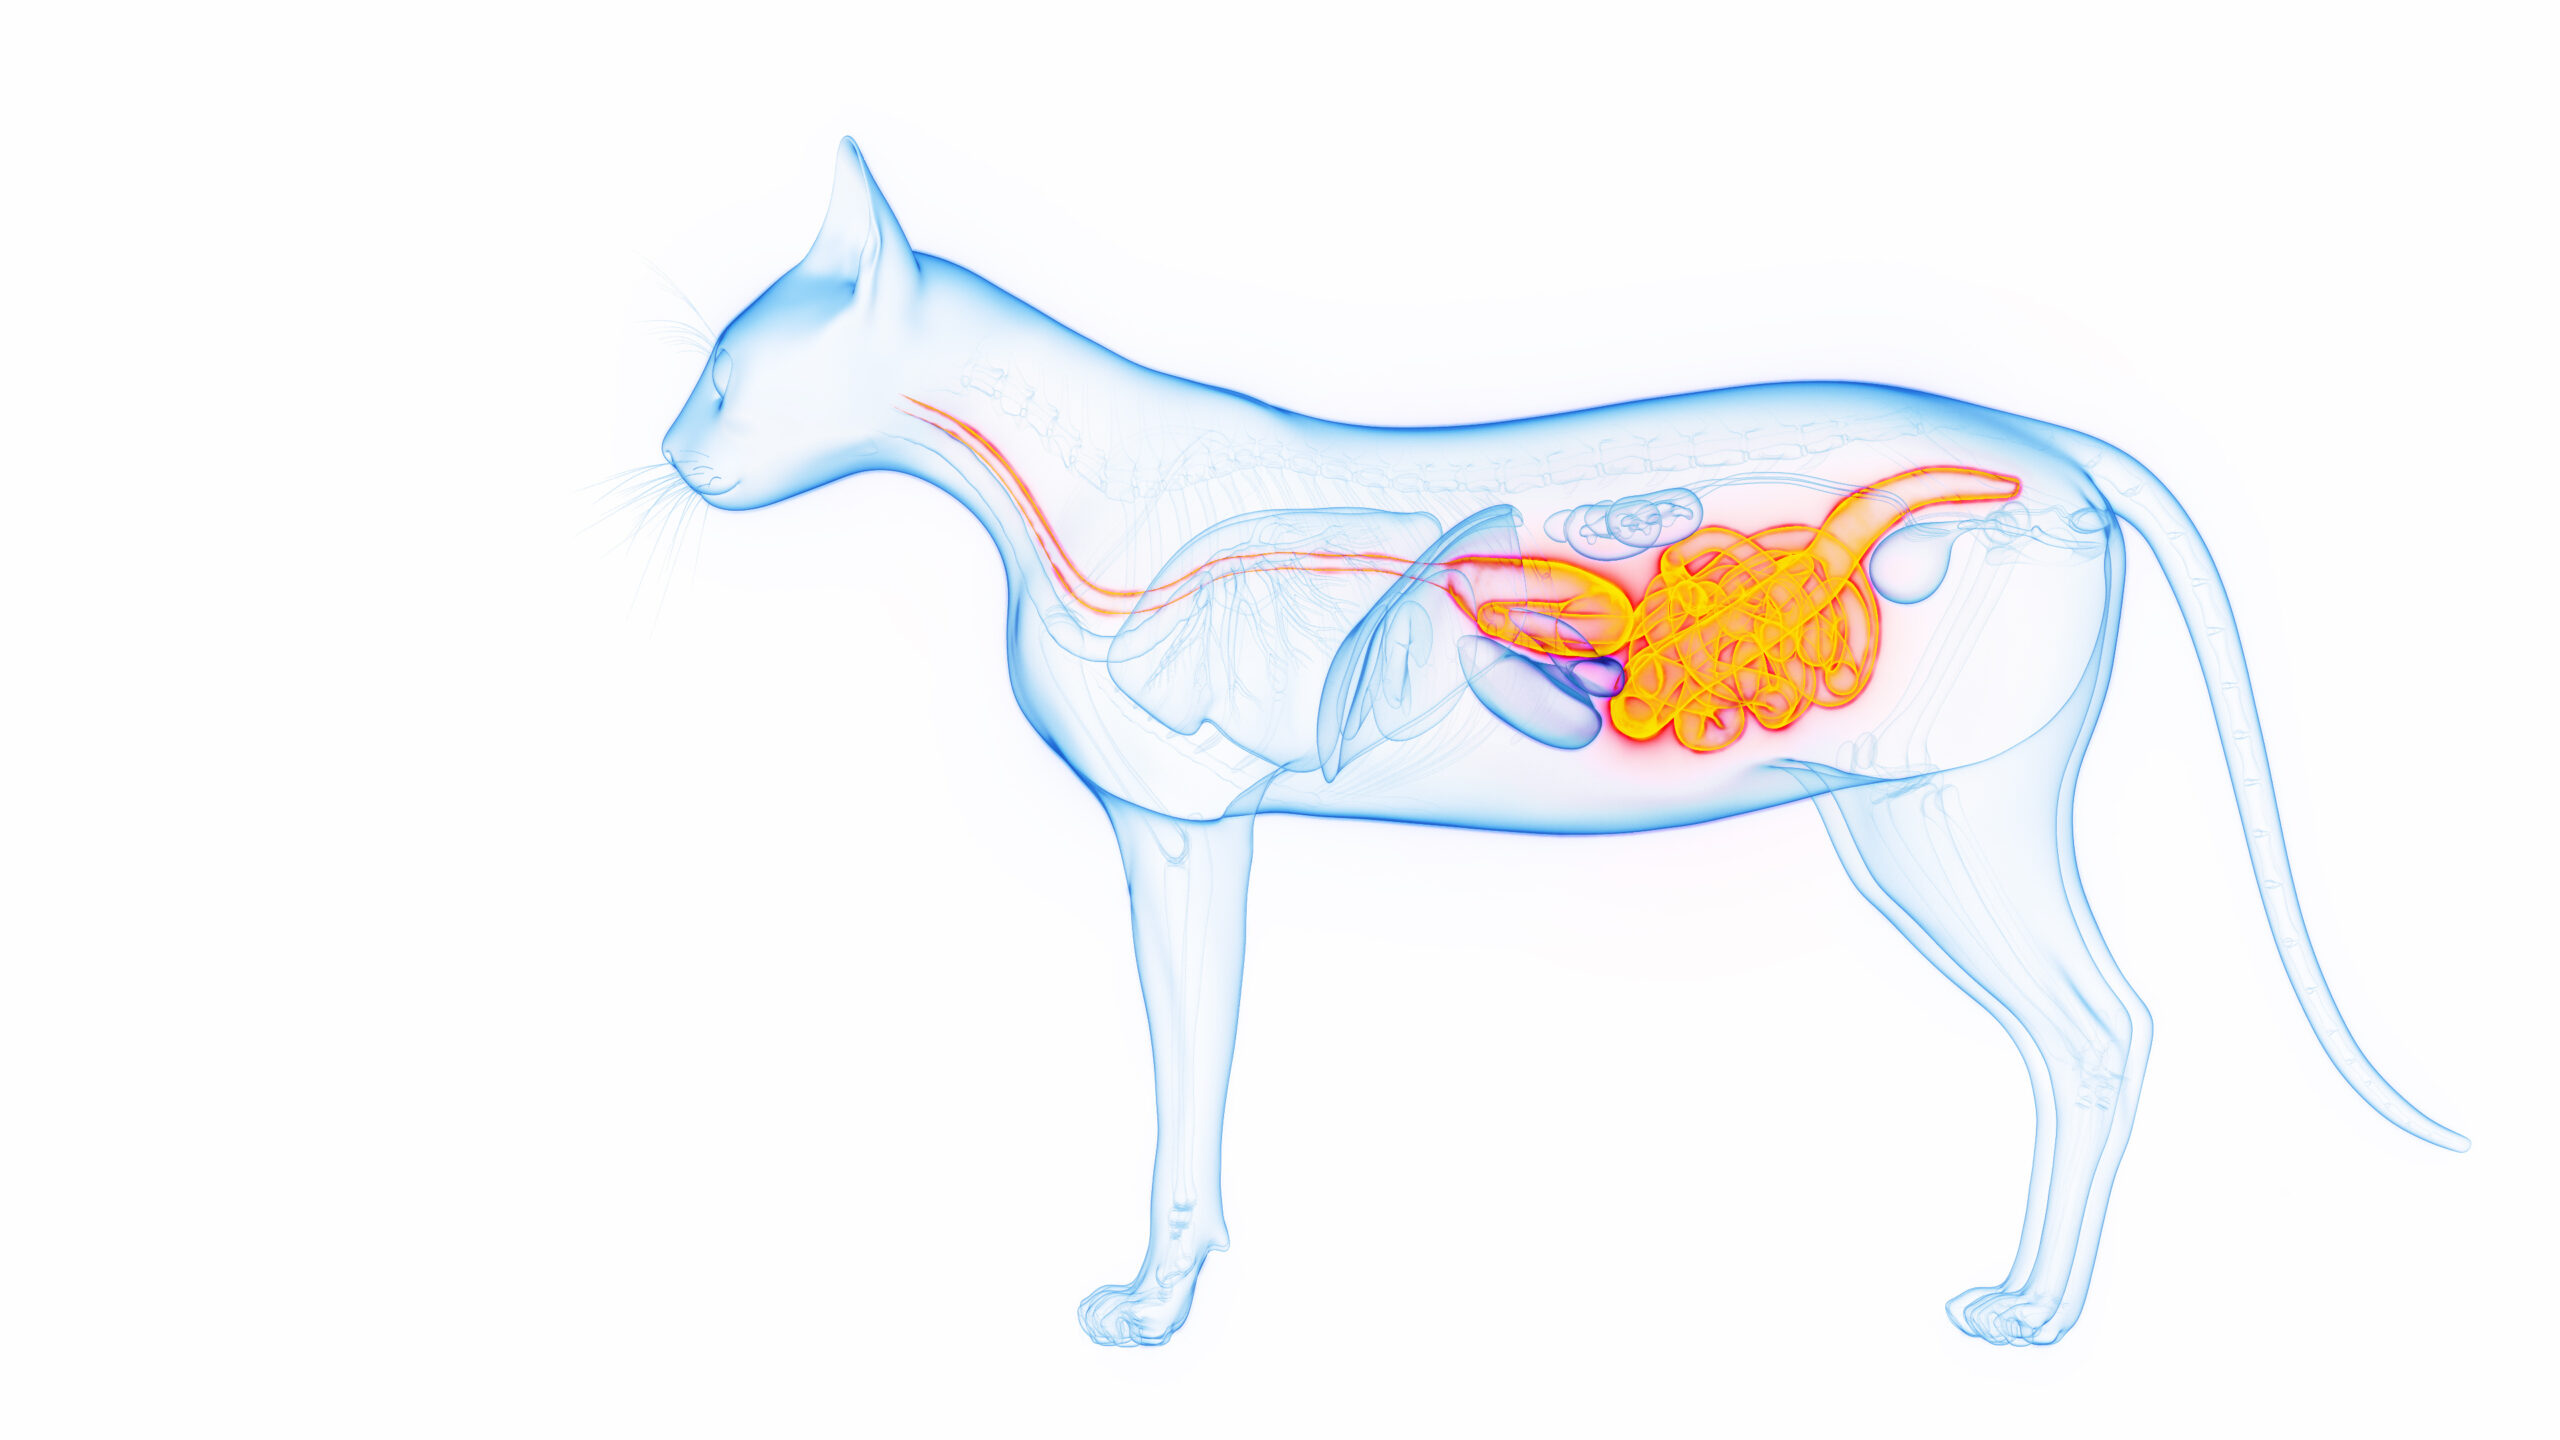 3D medical illustration of a cat's digestive system